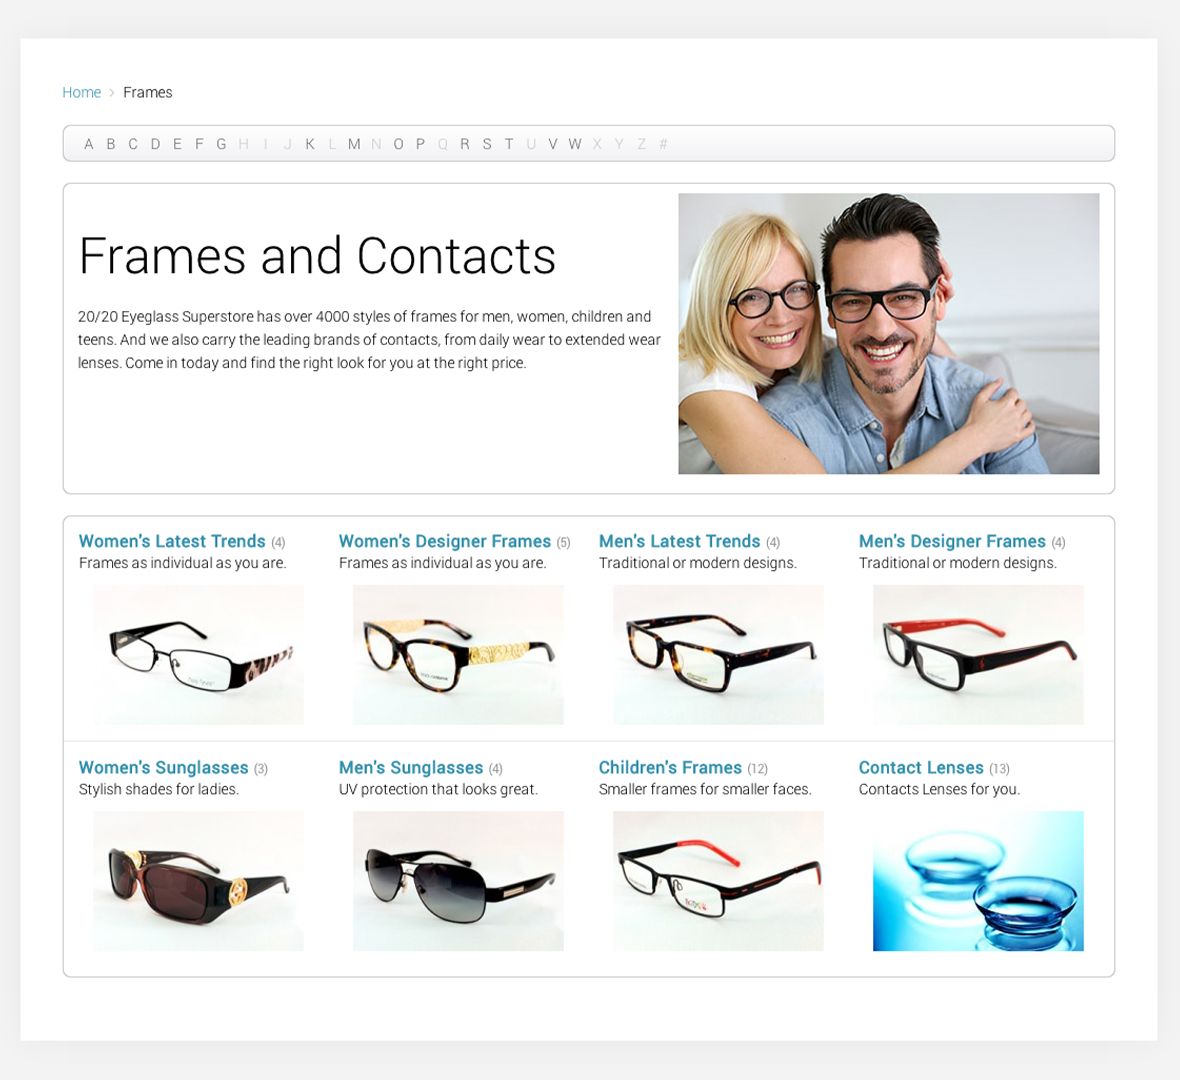 20/20 Eyeglass Superstore catalog webpage